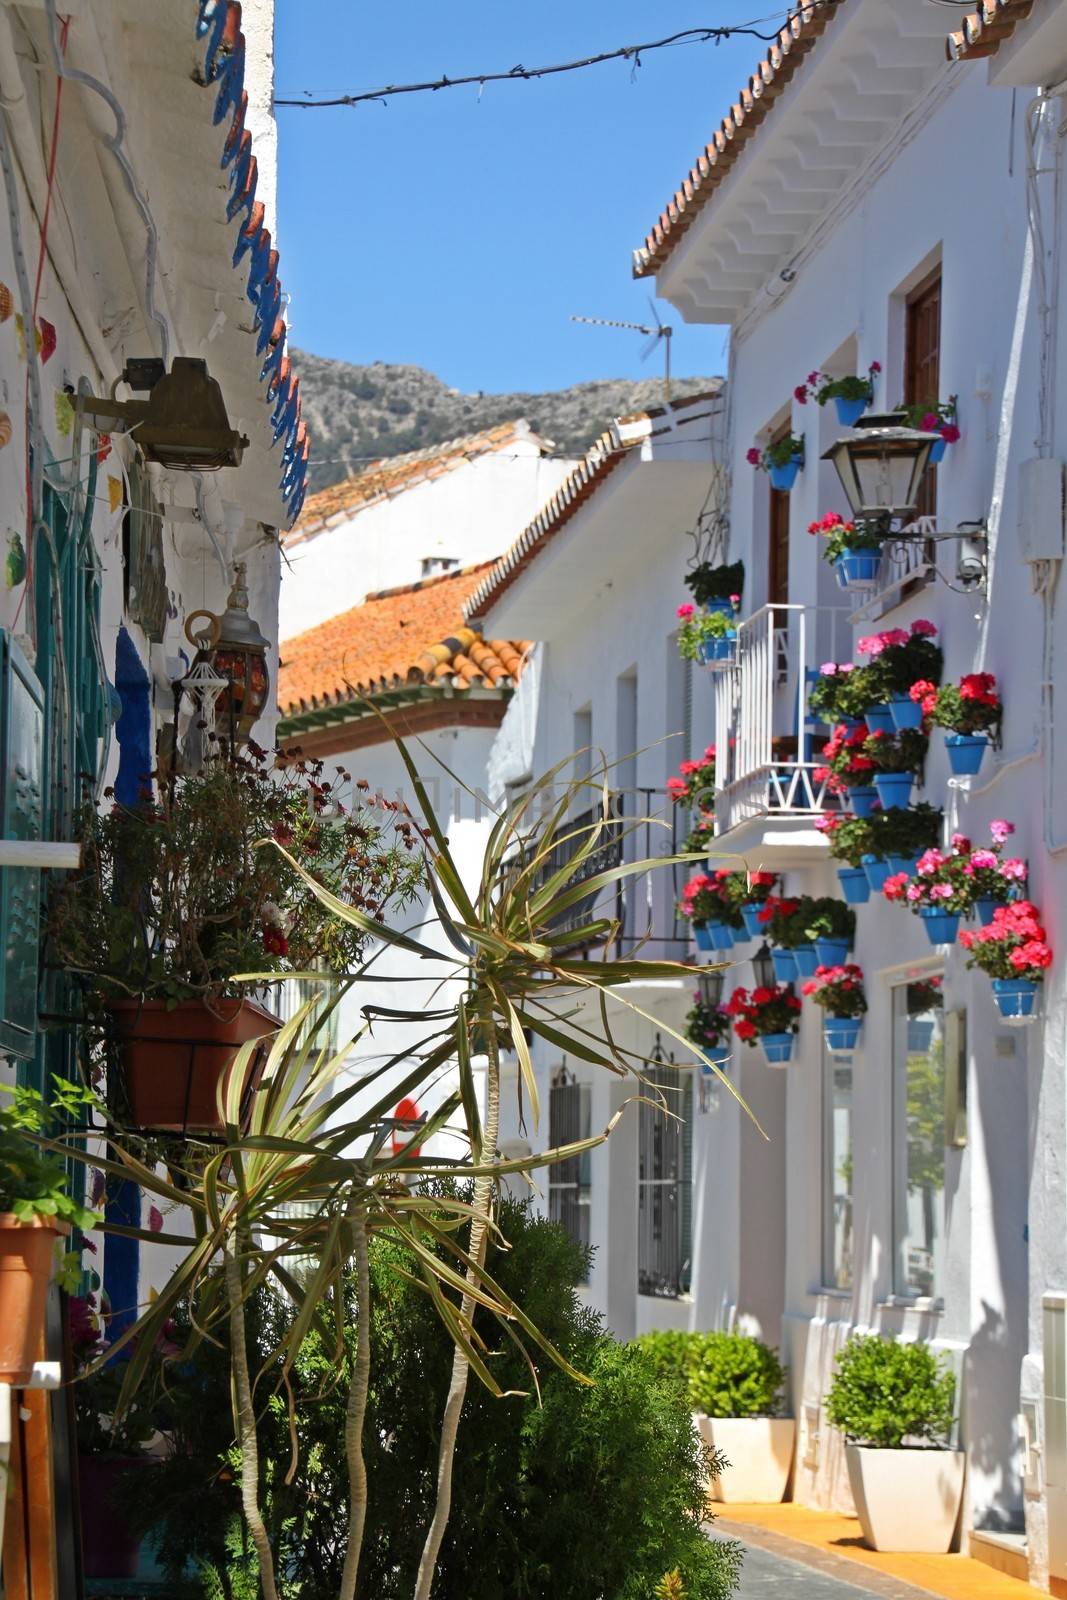 Colourful village street of Benalmadena Pueblo in Malaga province of Andalucia, Spain